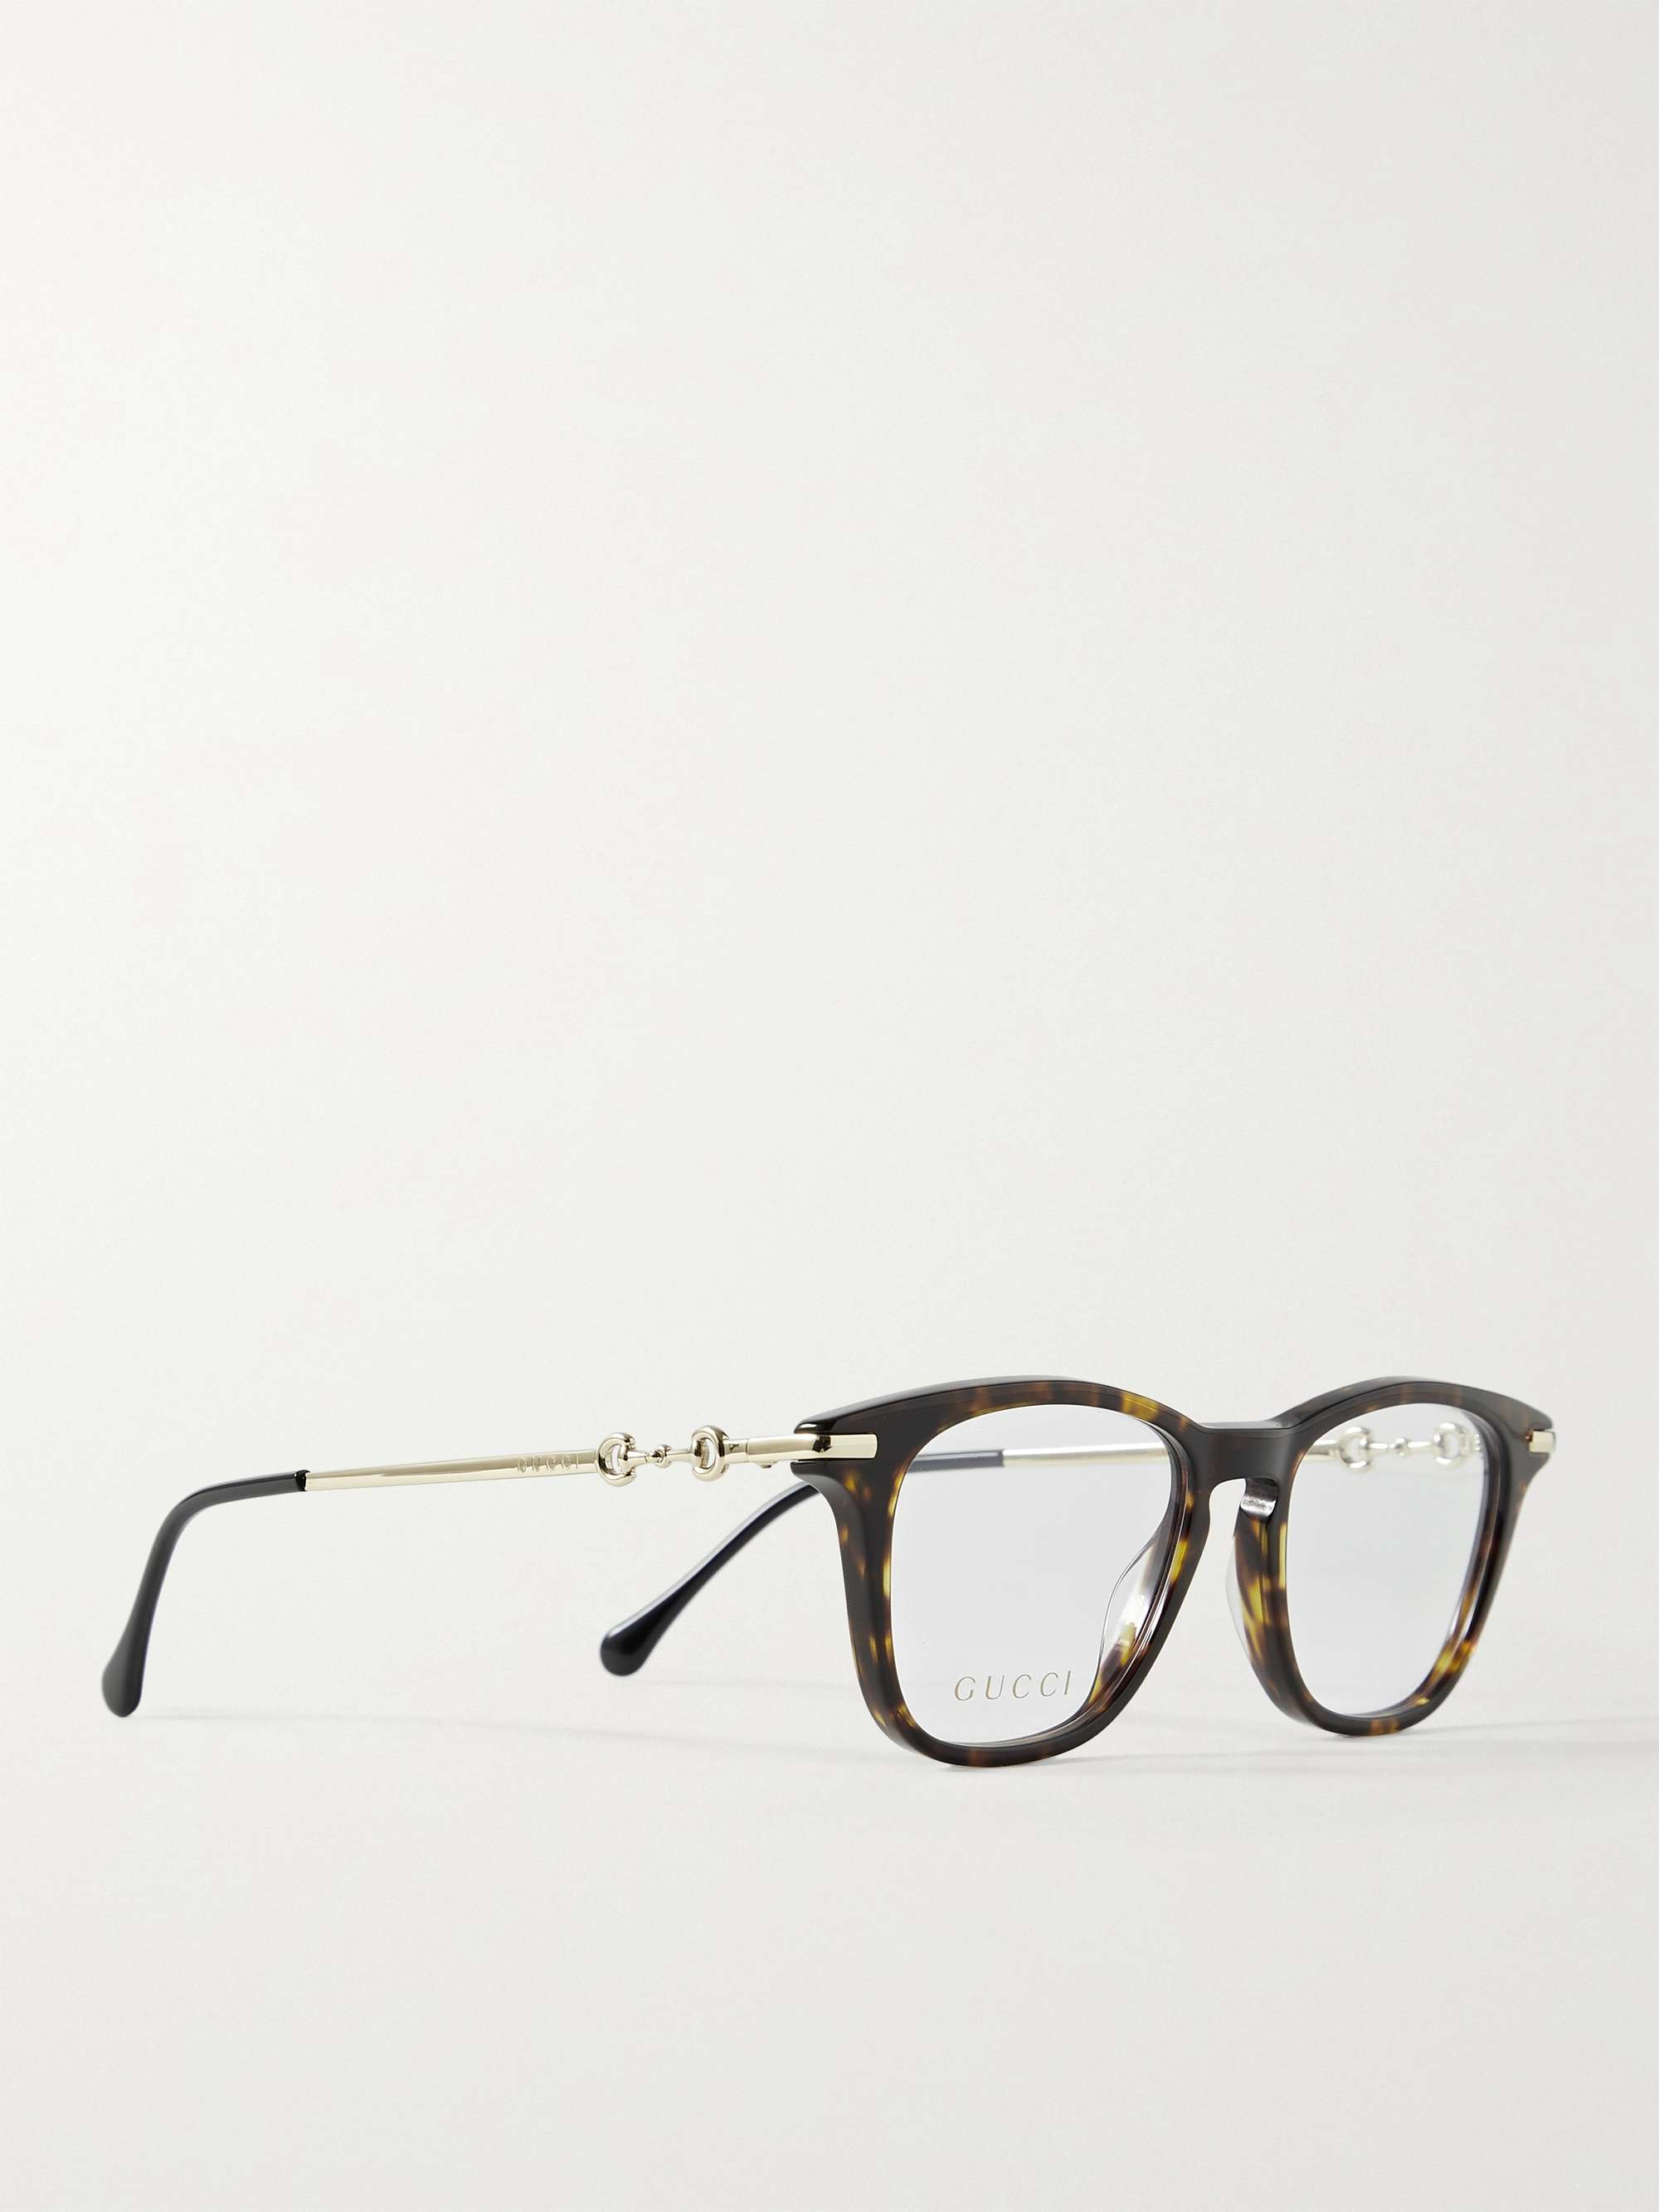 GUCCI EYEWEAR Square-Frame Tortoiseshell Acetate and Gold-Tone Optical Glasses